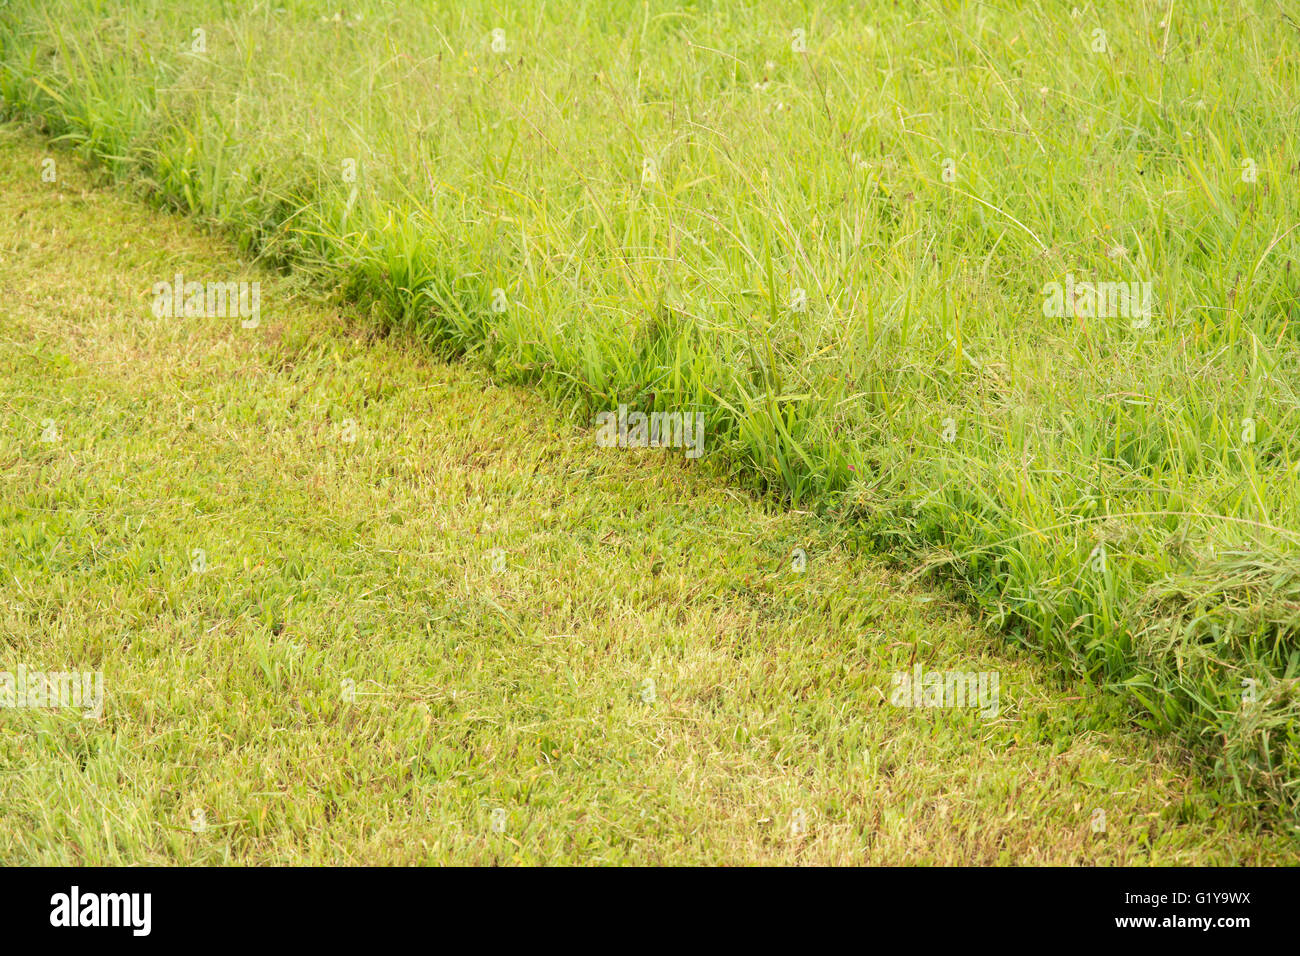 Diagonal line separating cut and uncut grass Stock Photo